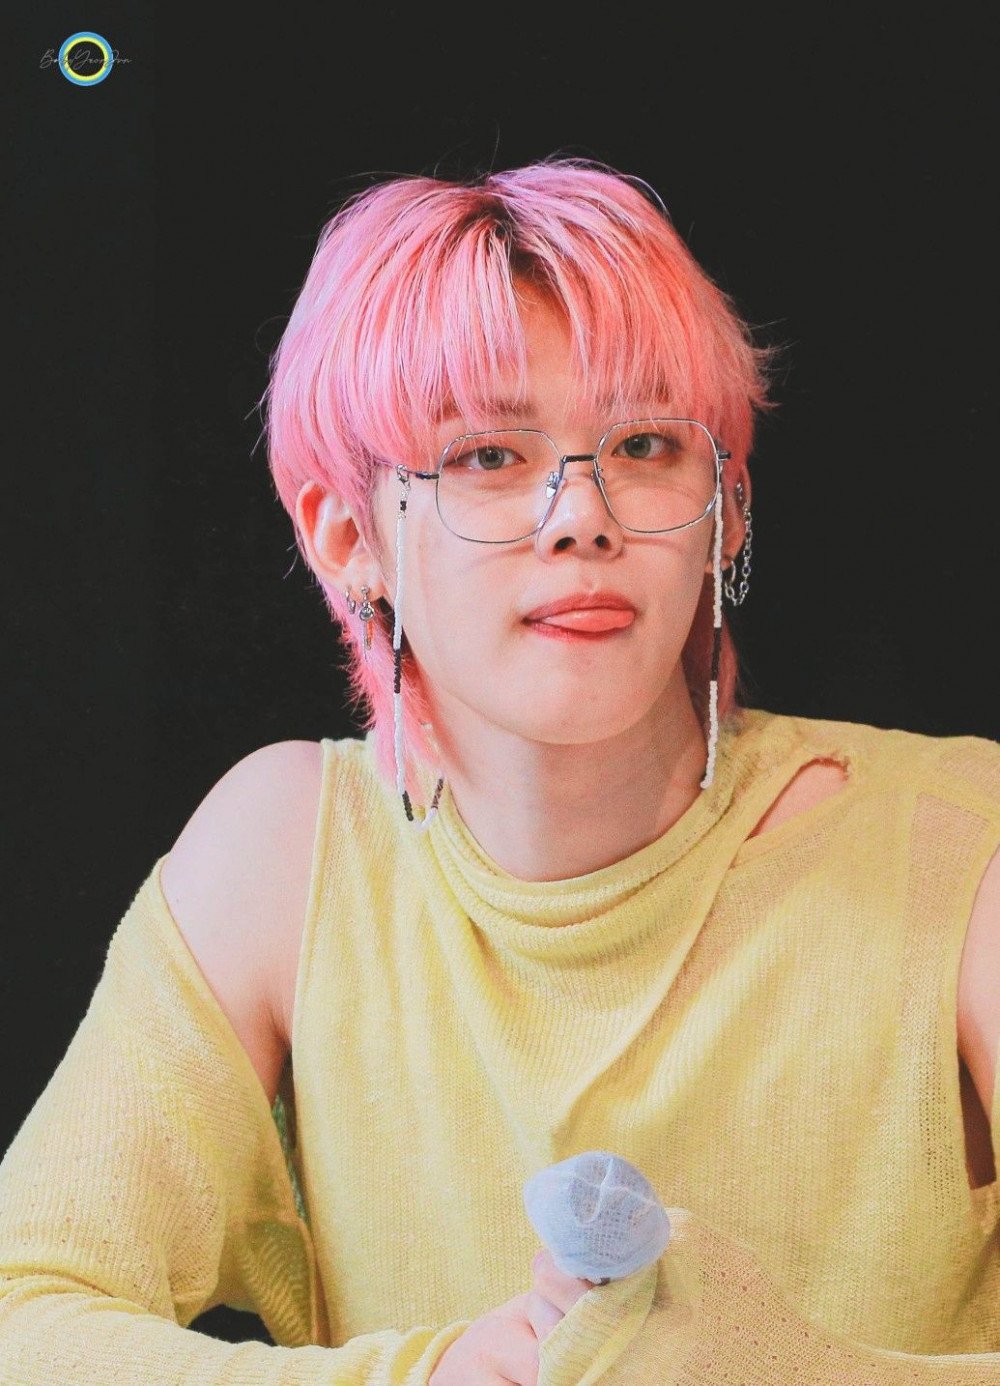 Male Idols Who Look Cute in Pink Hair | allkpop